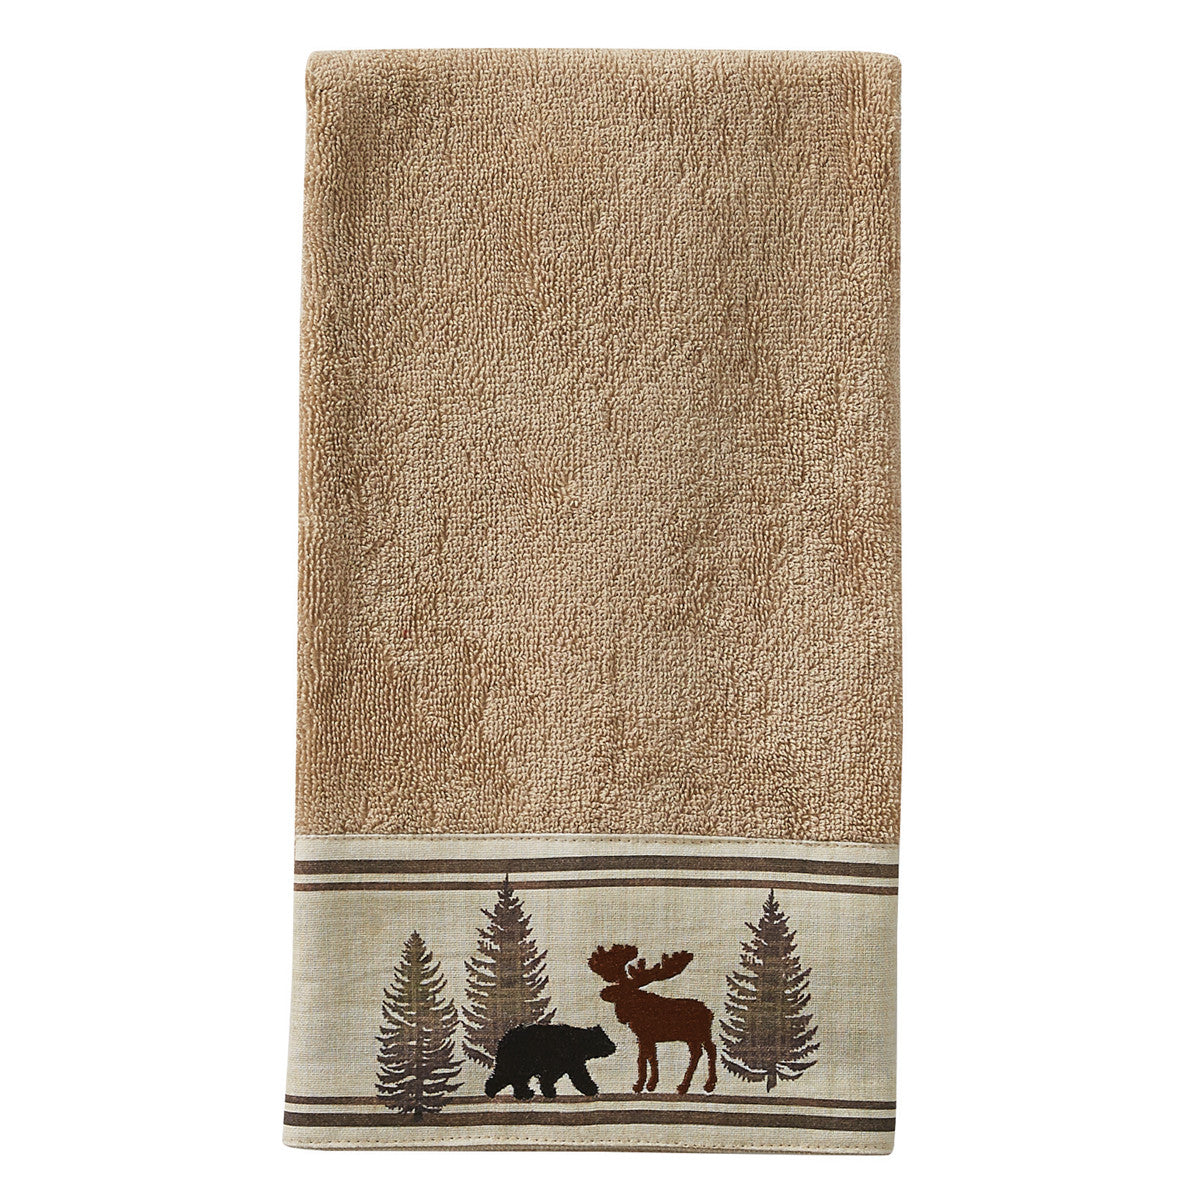 Black Forest Hand Towel - Park Designs